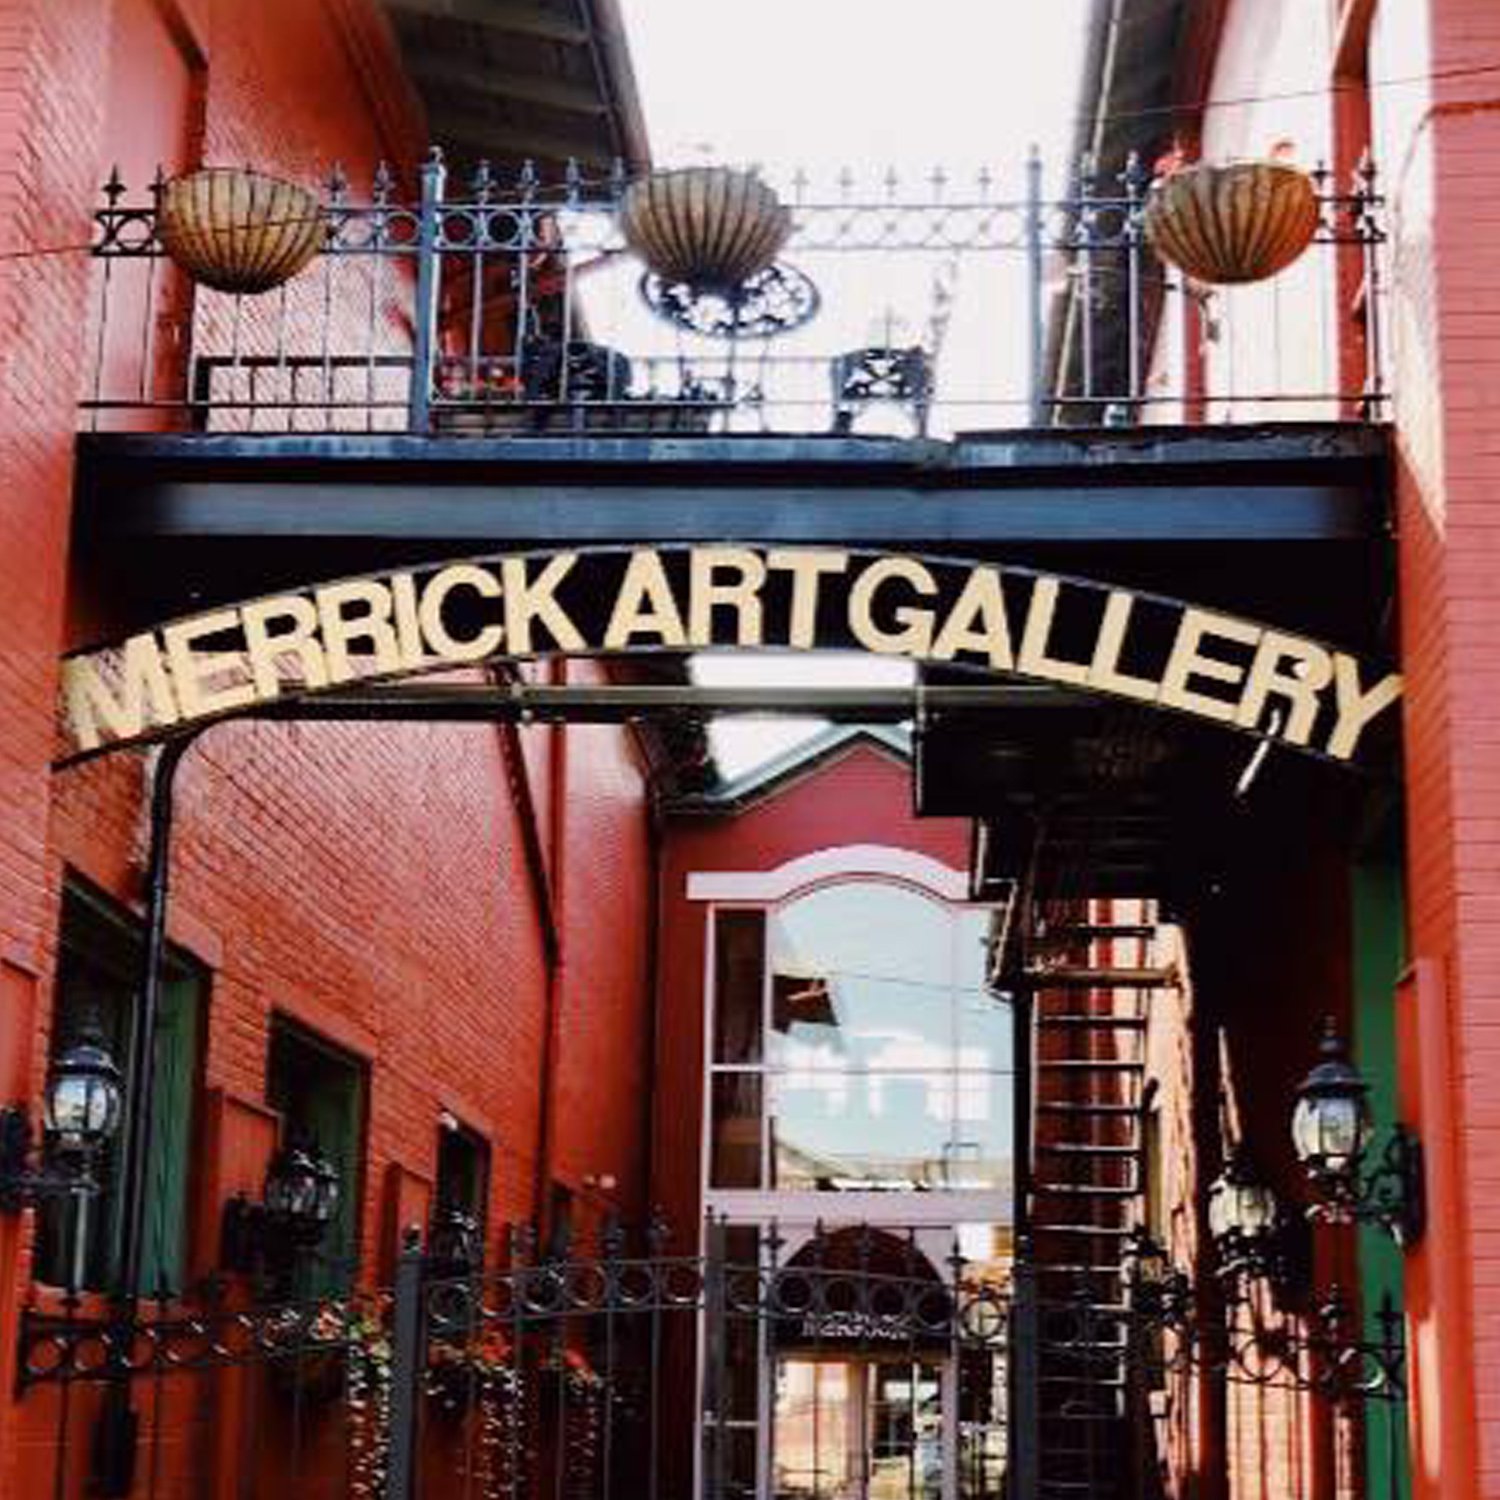 Merrick Art Gallery.jpg